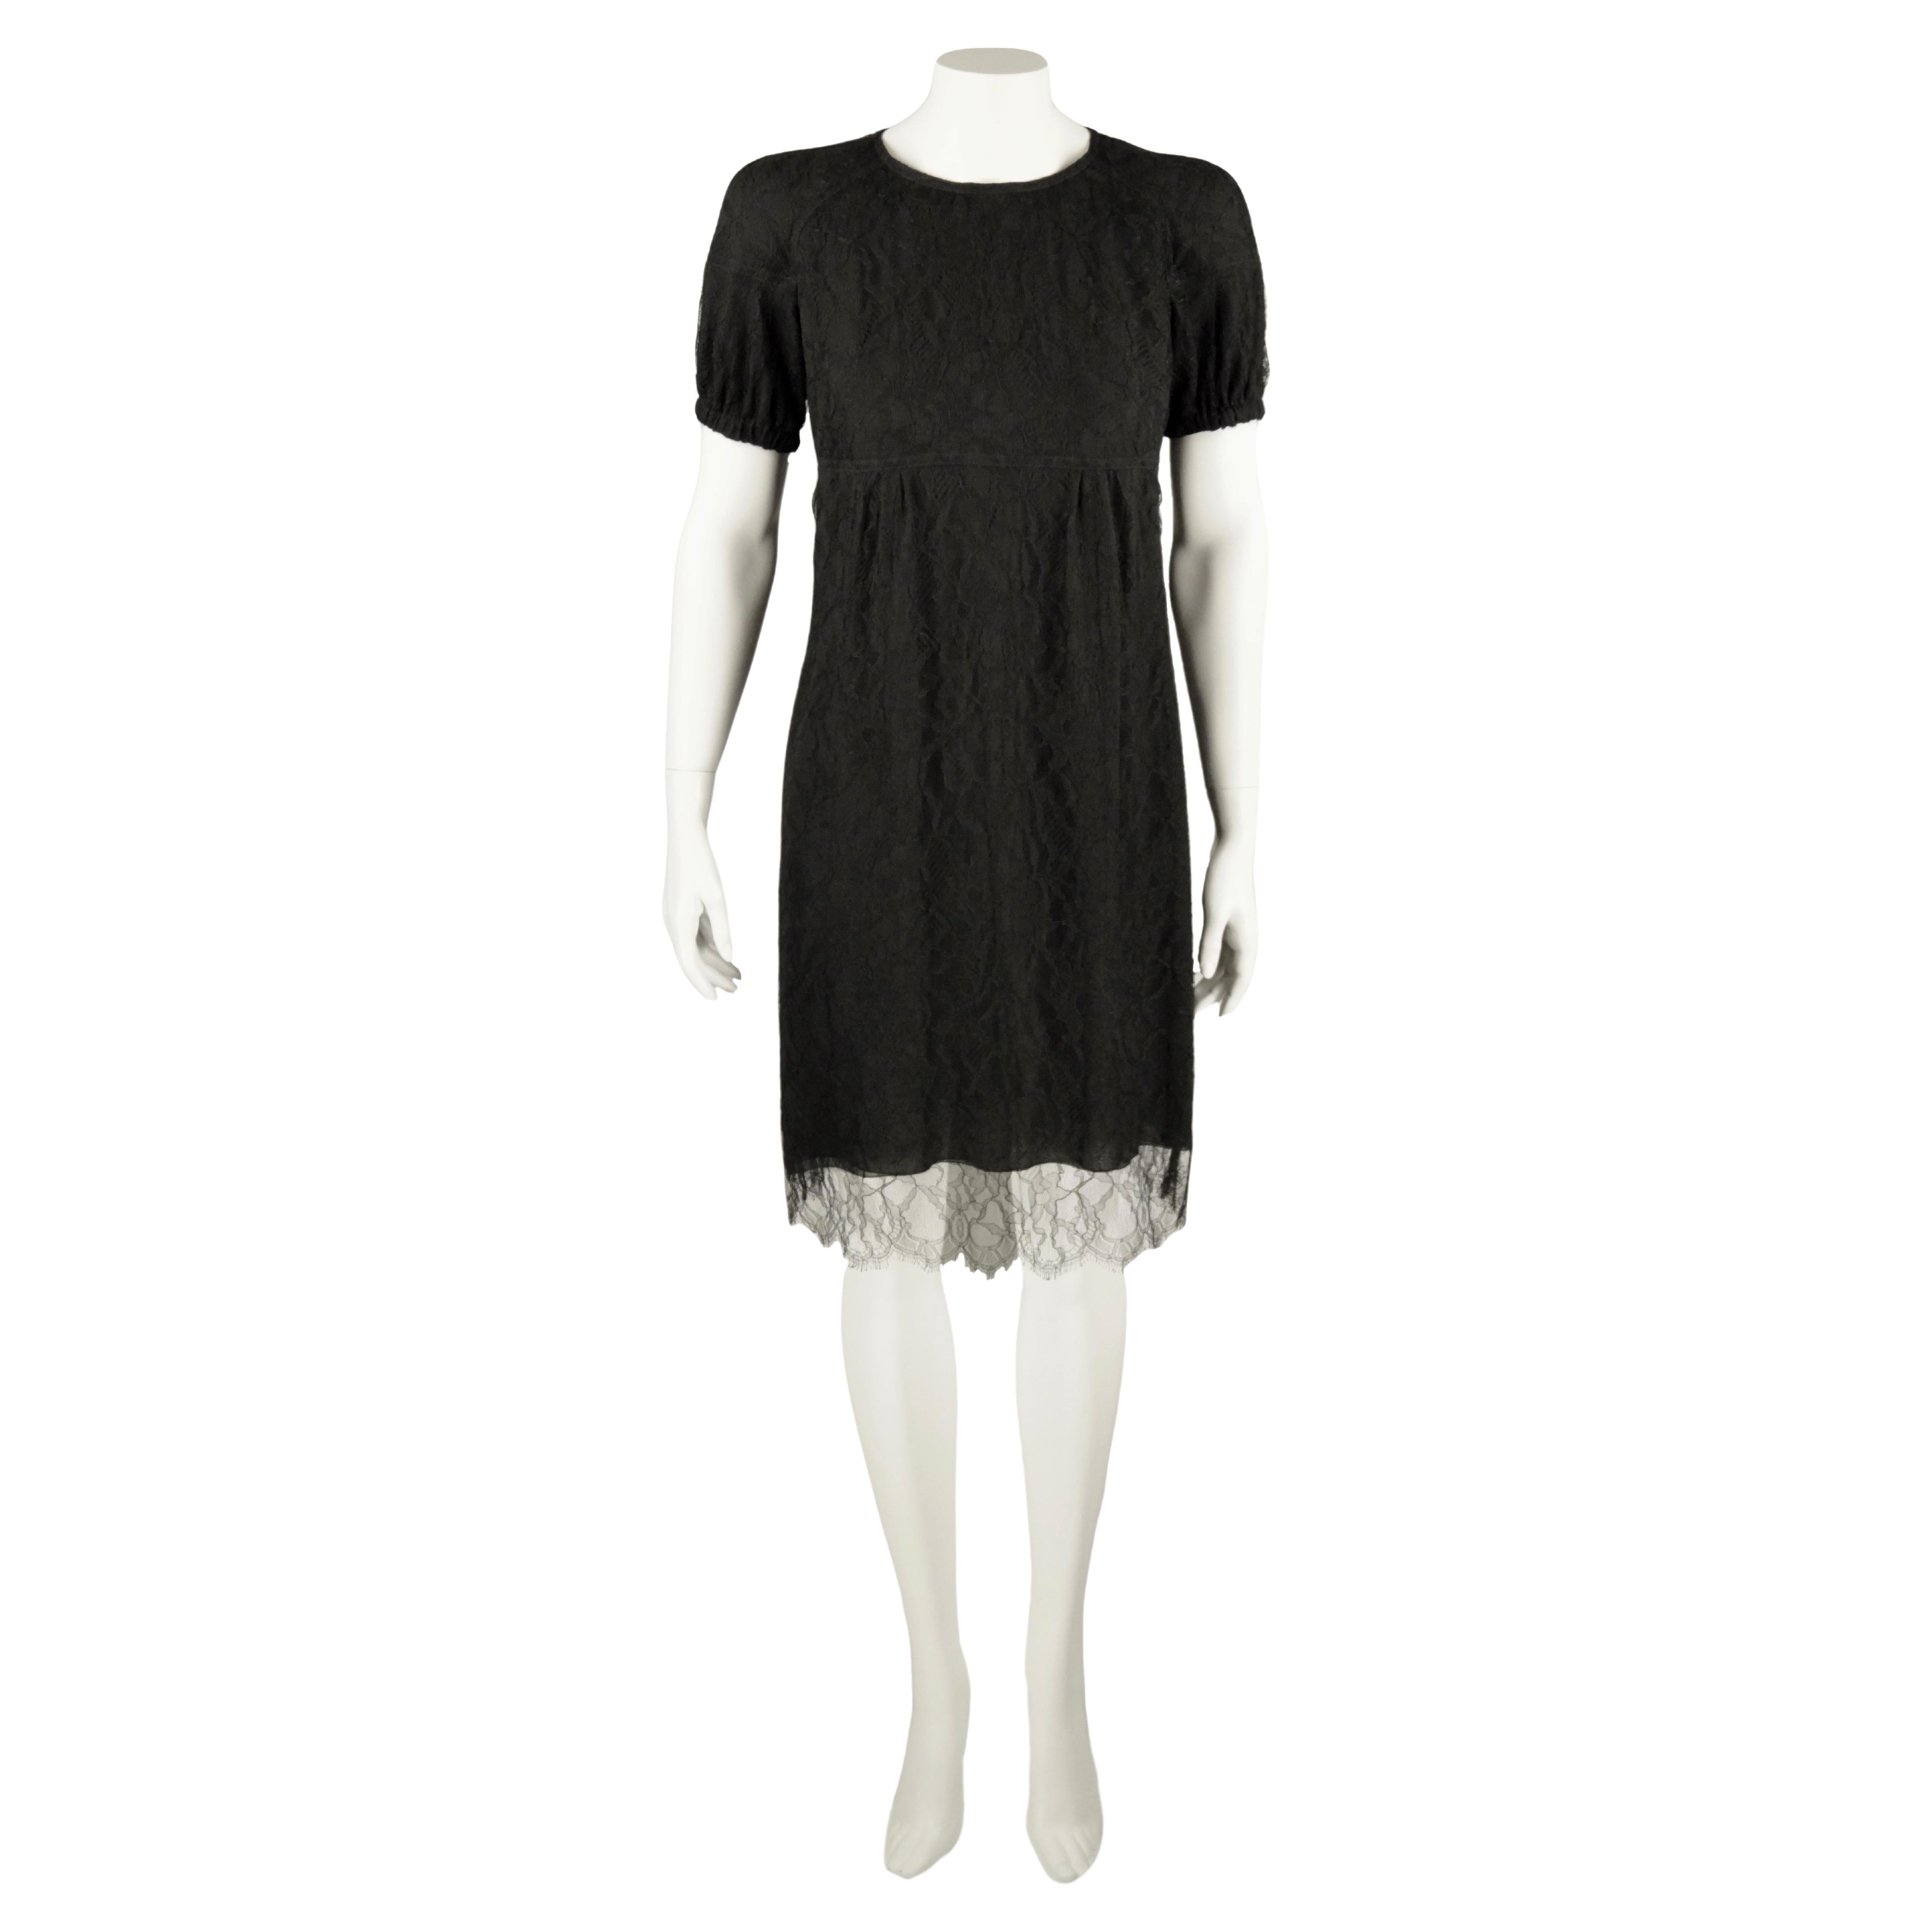 Burberry black lace dress For Sale